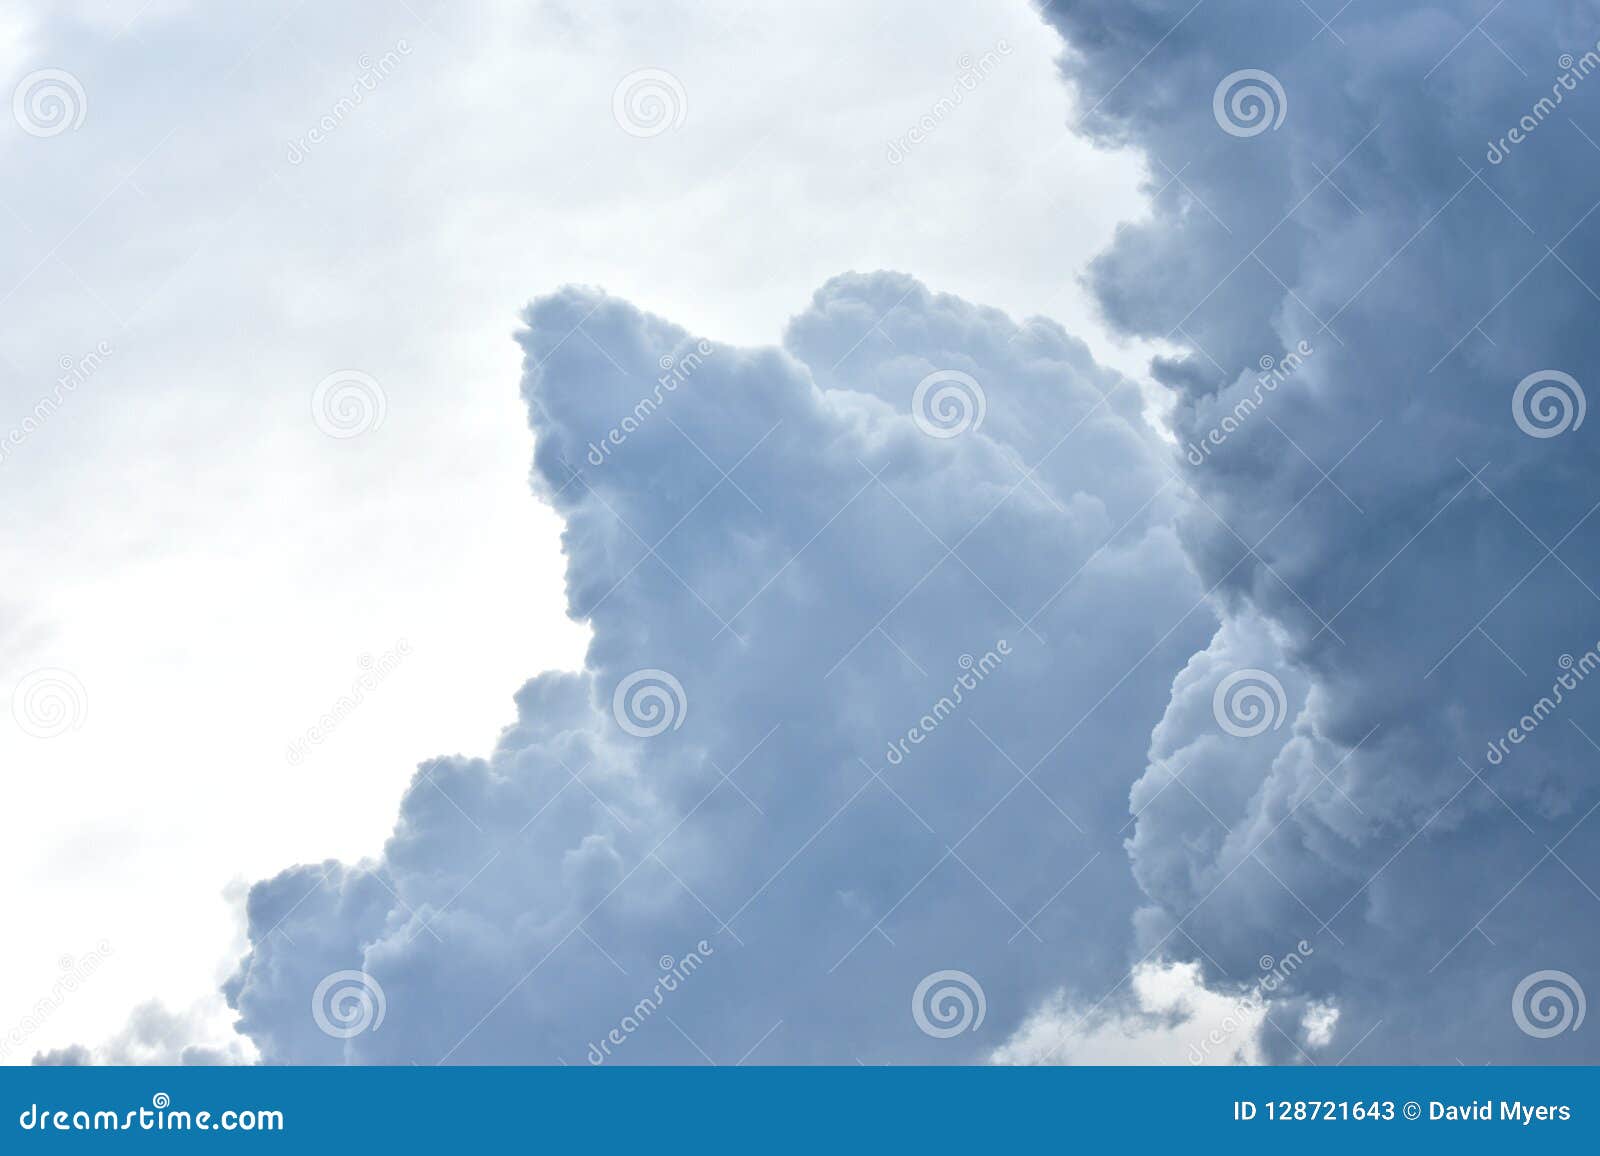 clouds, cumulo-nimbus, storm, fall weather